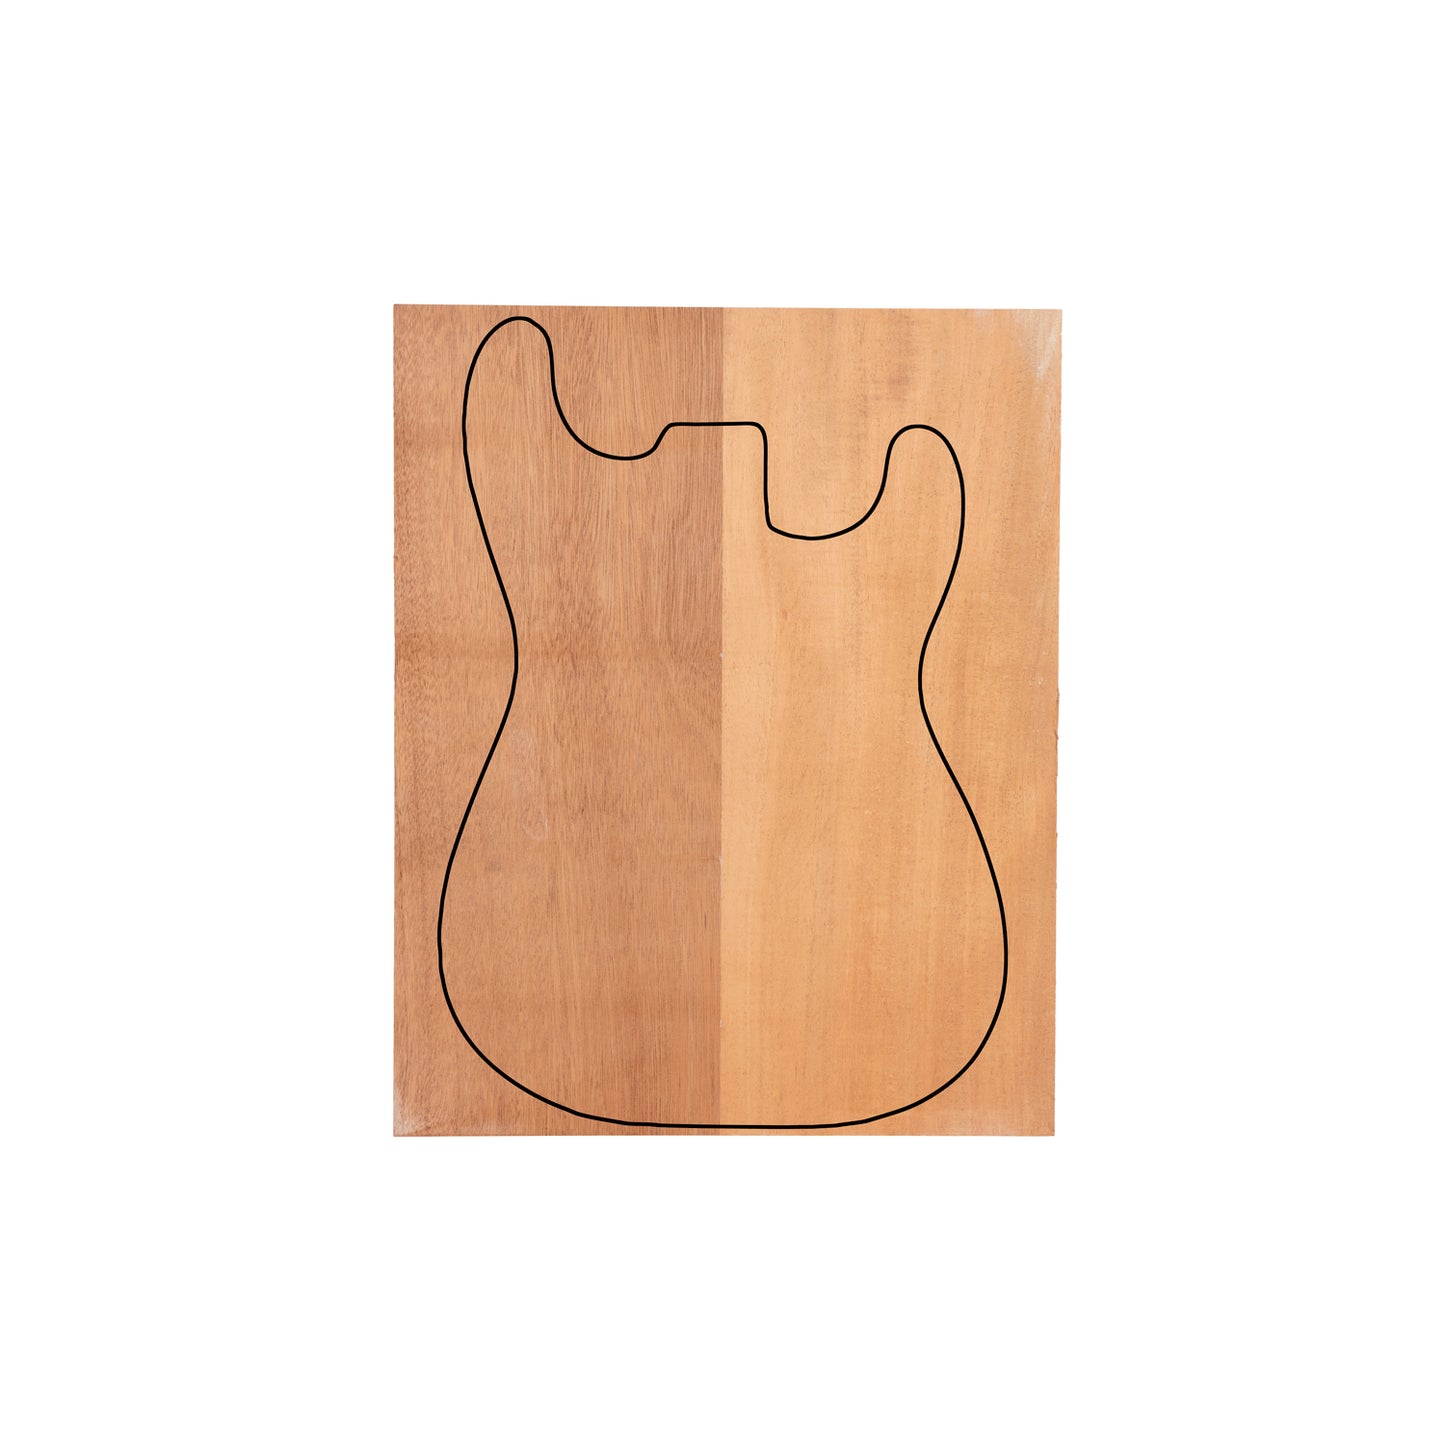 AE Guitars® Premium Mahogany Guitar Body Blank 2 Piece Glued Solid